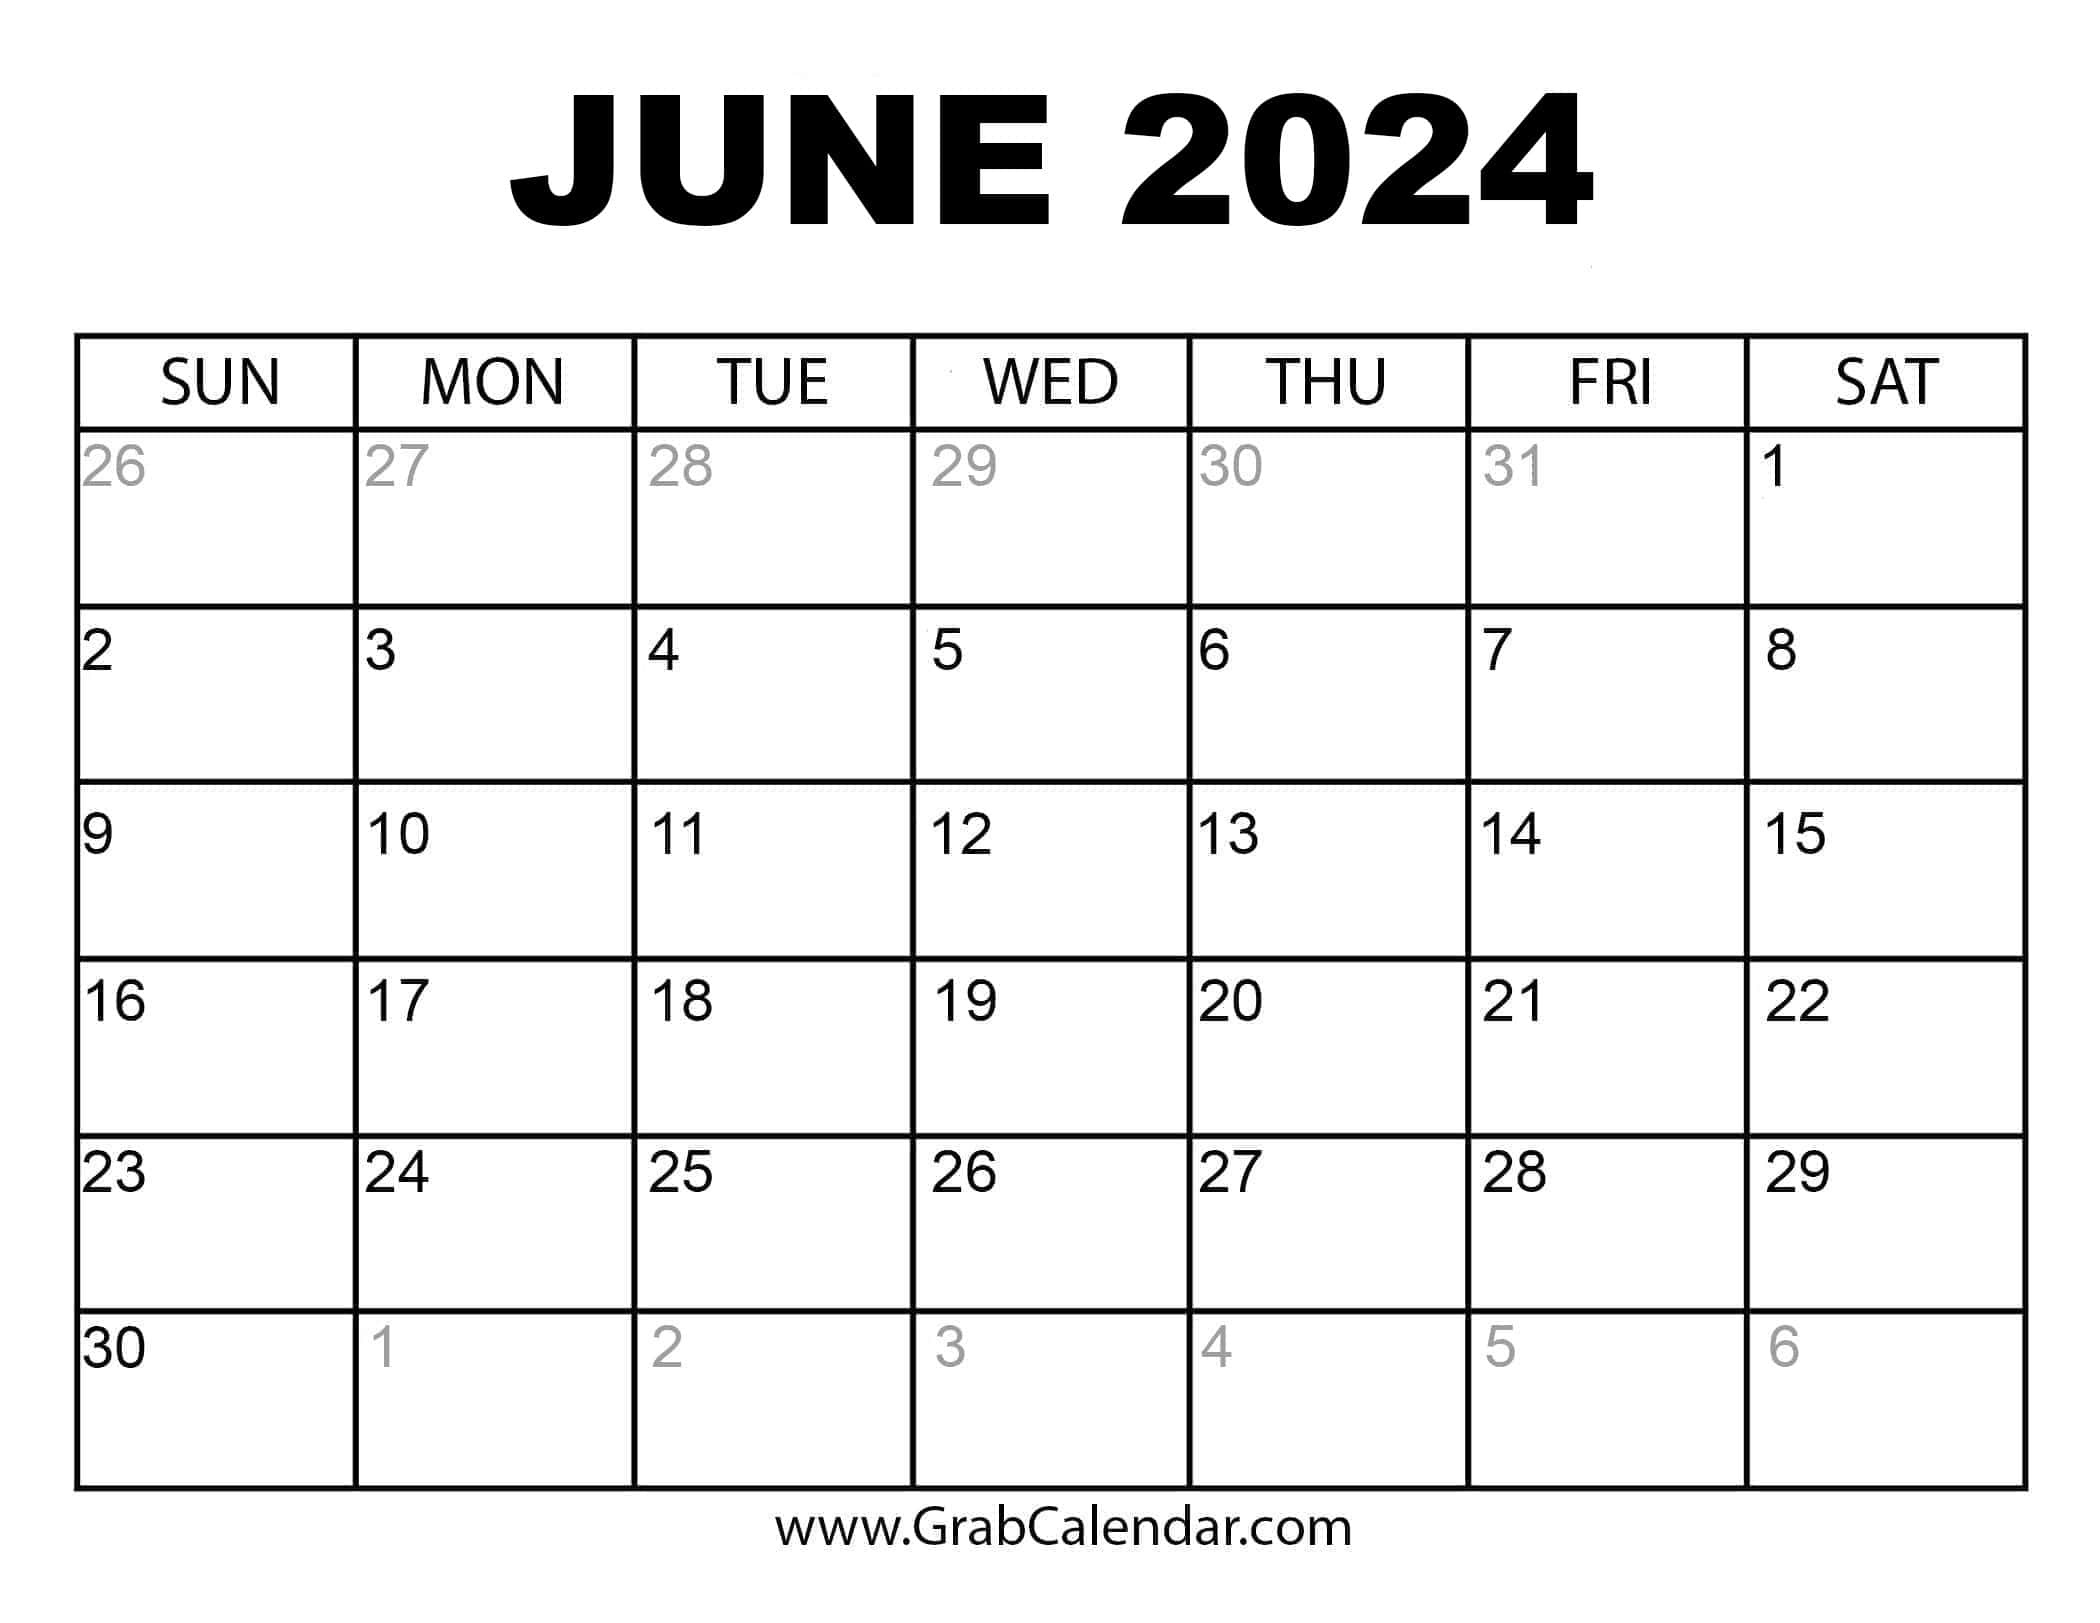 Printable June 2024 Calendar with regard to Show Me The June Calendar 2024